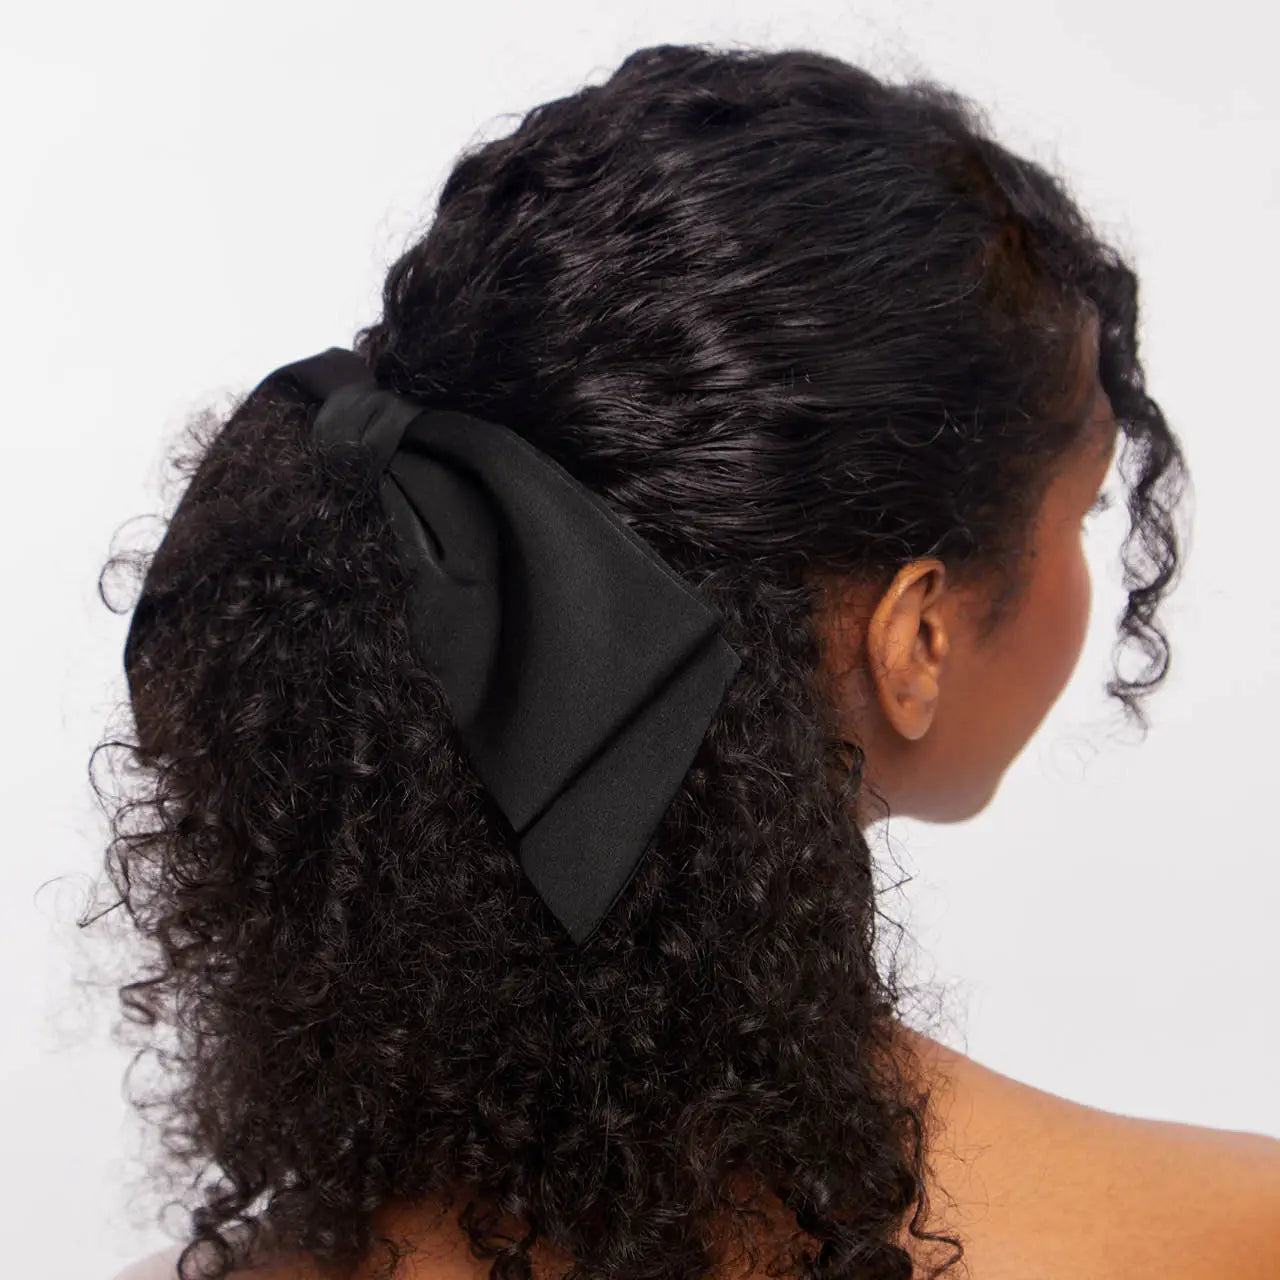 Hair Clip - Bow - Black